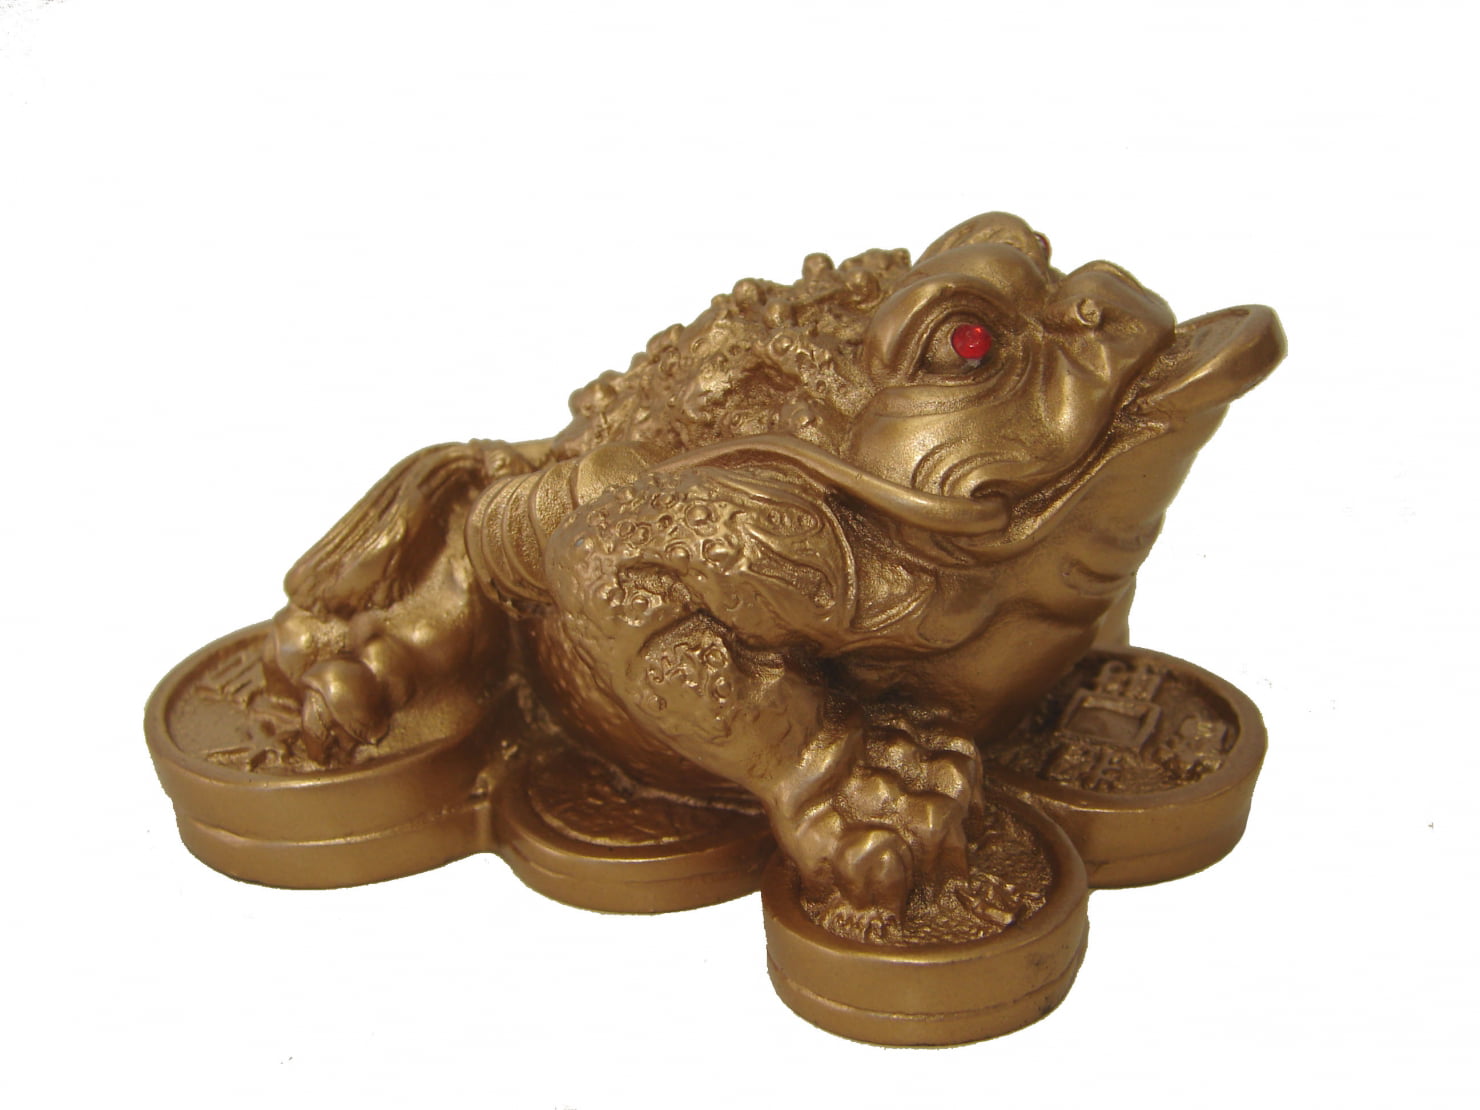 Feng Shui Golden Lucky Frog Statue 3-legged Money Toad Figurine On Wealth Ingots 